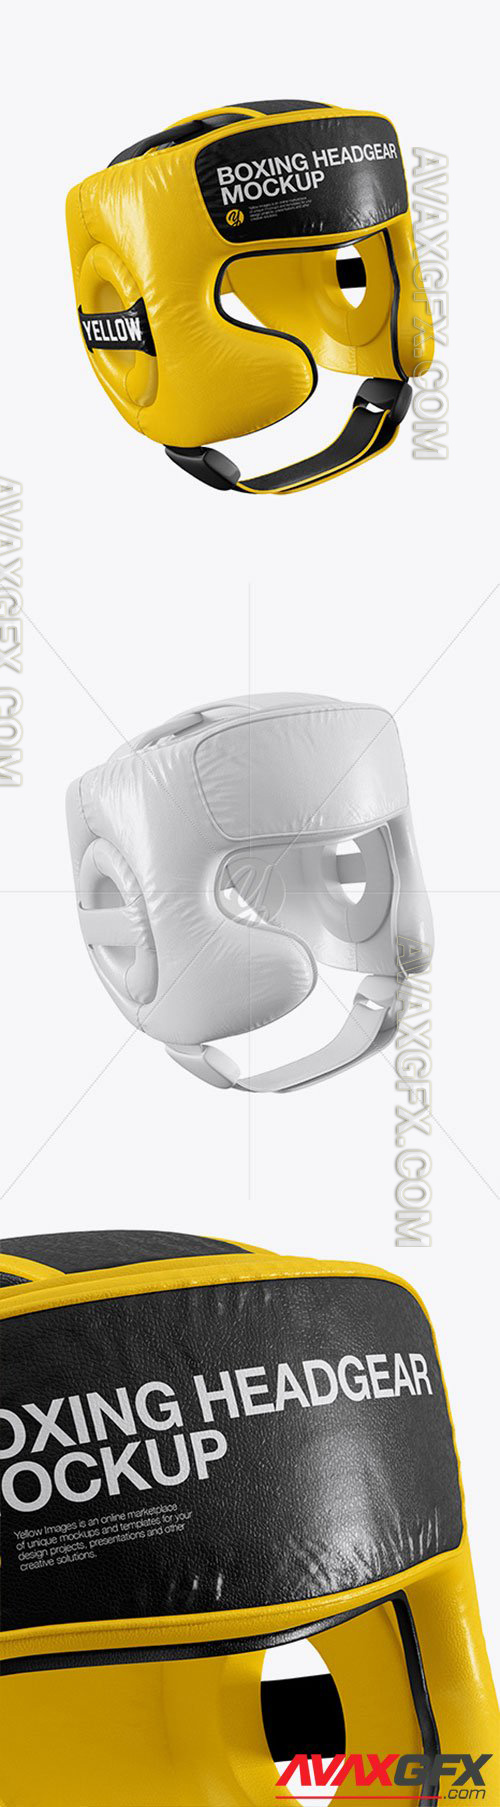 Boxing Headgear Mockup - Half Side View 21681